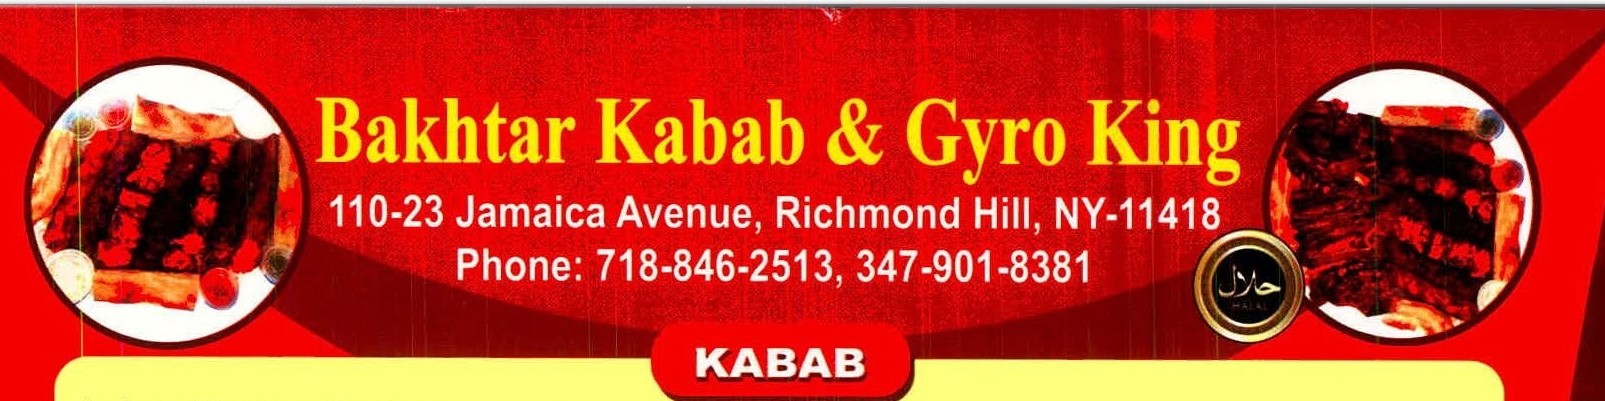 Bakhtar Kabab & Gyro King